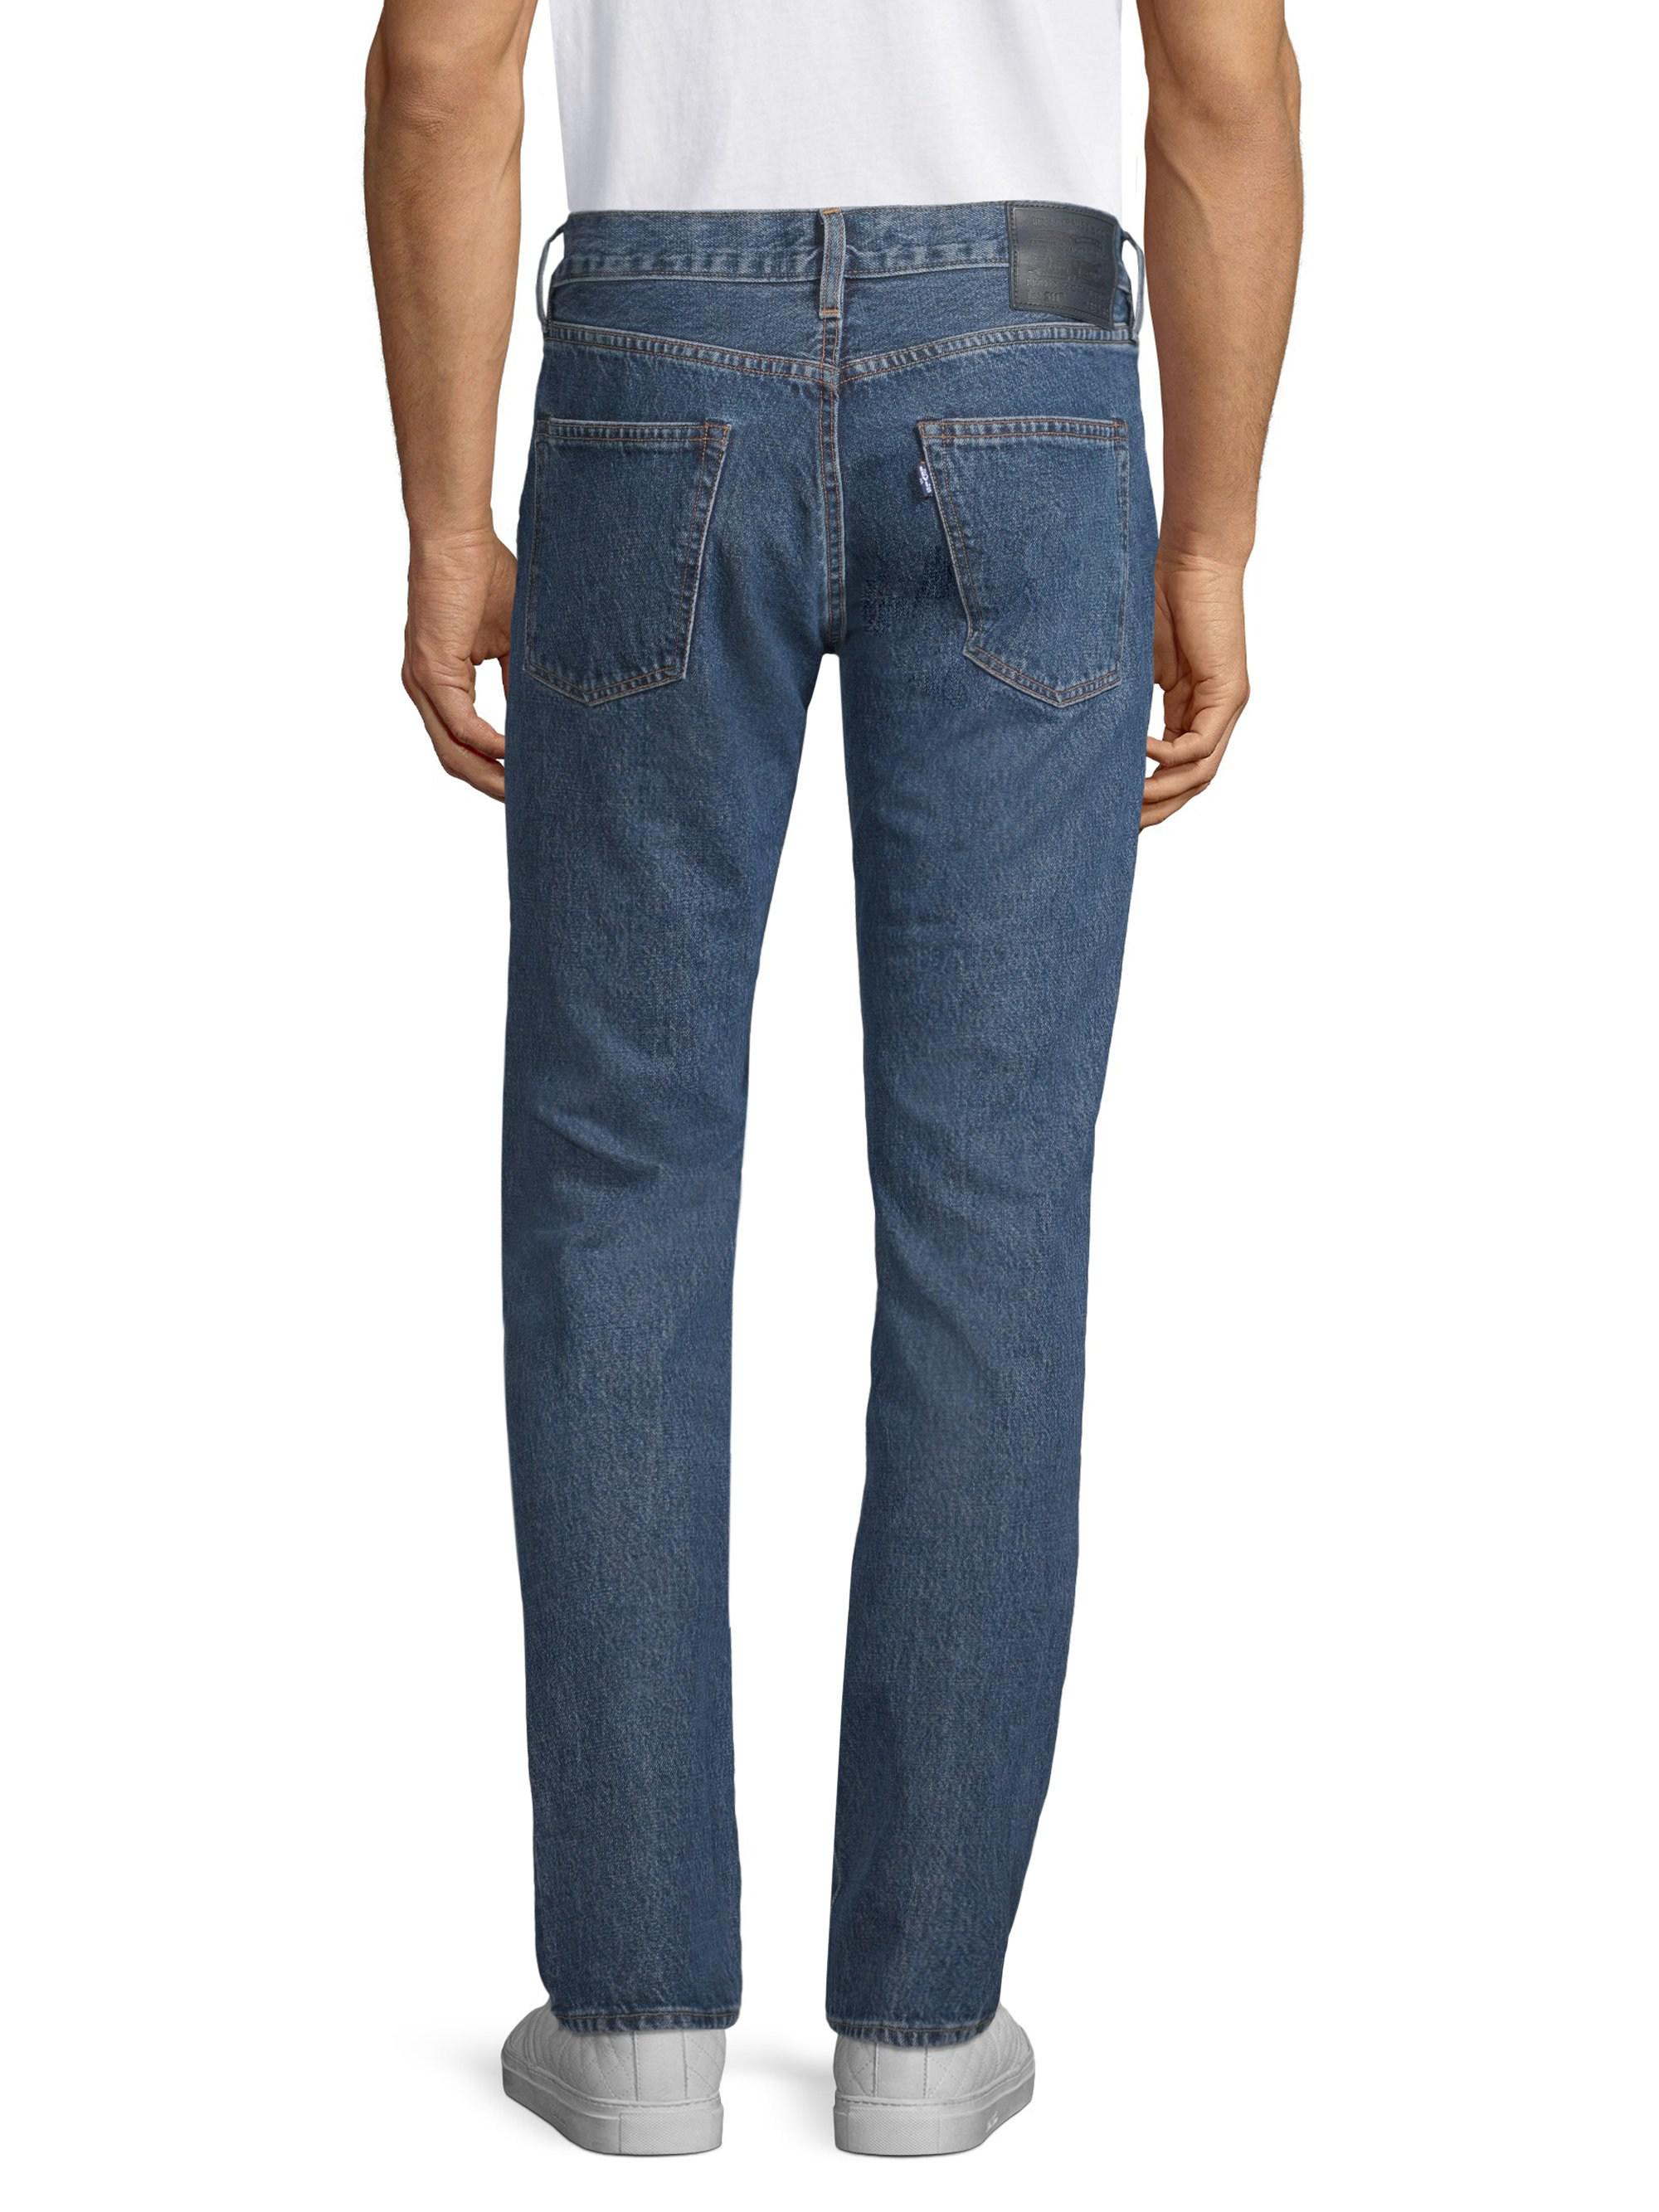 Levi's 511 Slim-fit Stonewash Jeans in Blue for Men - Lyst